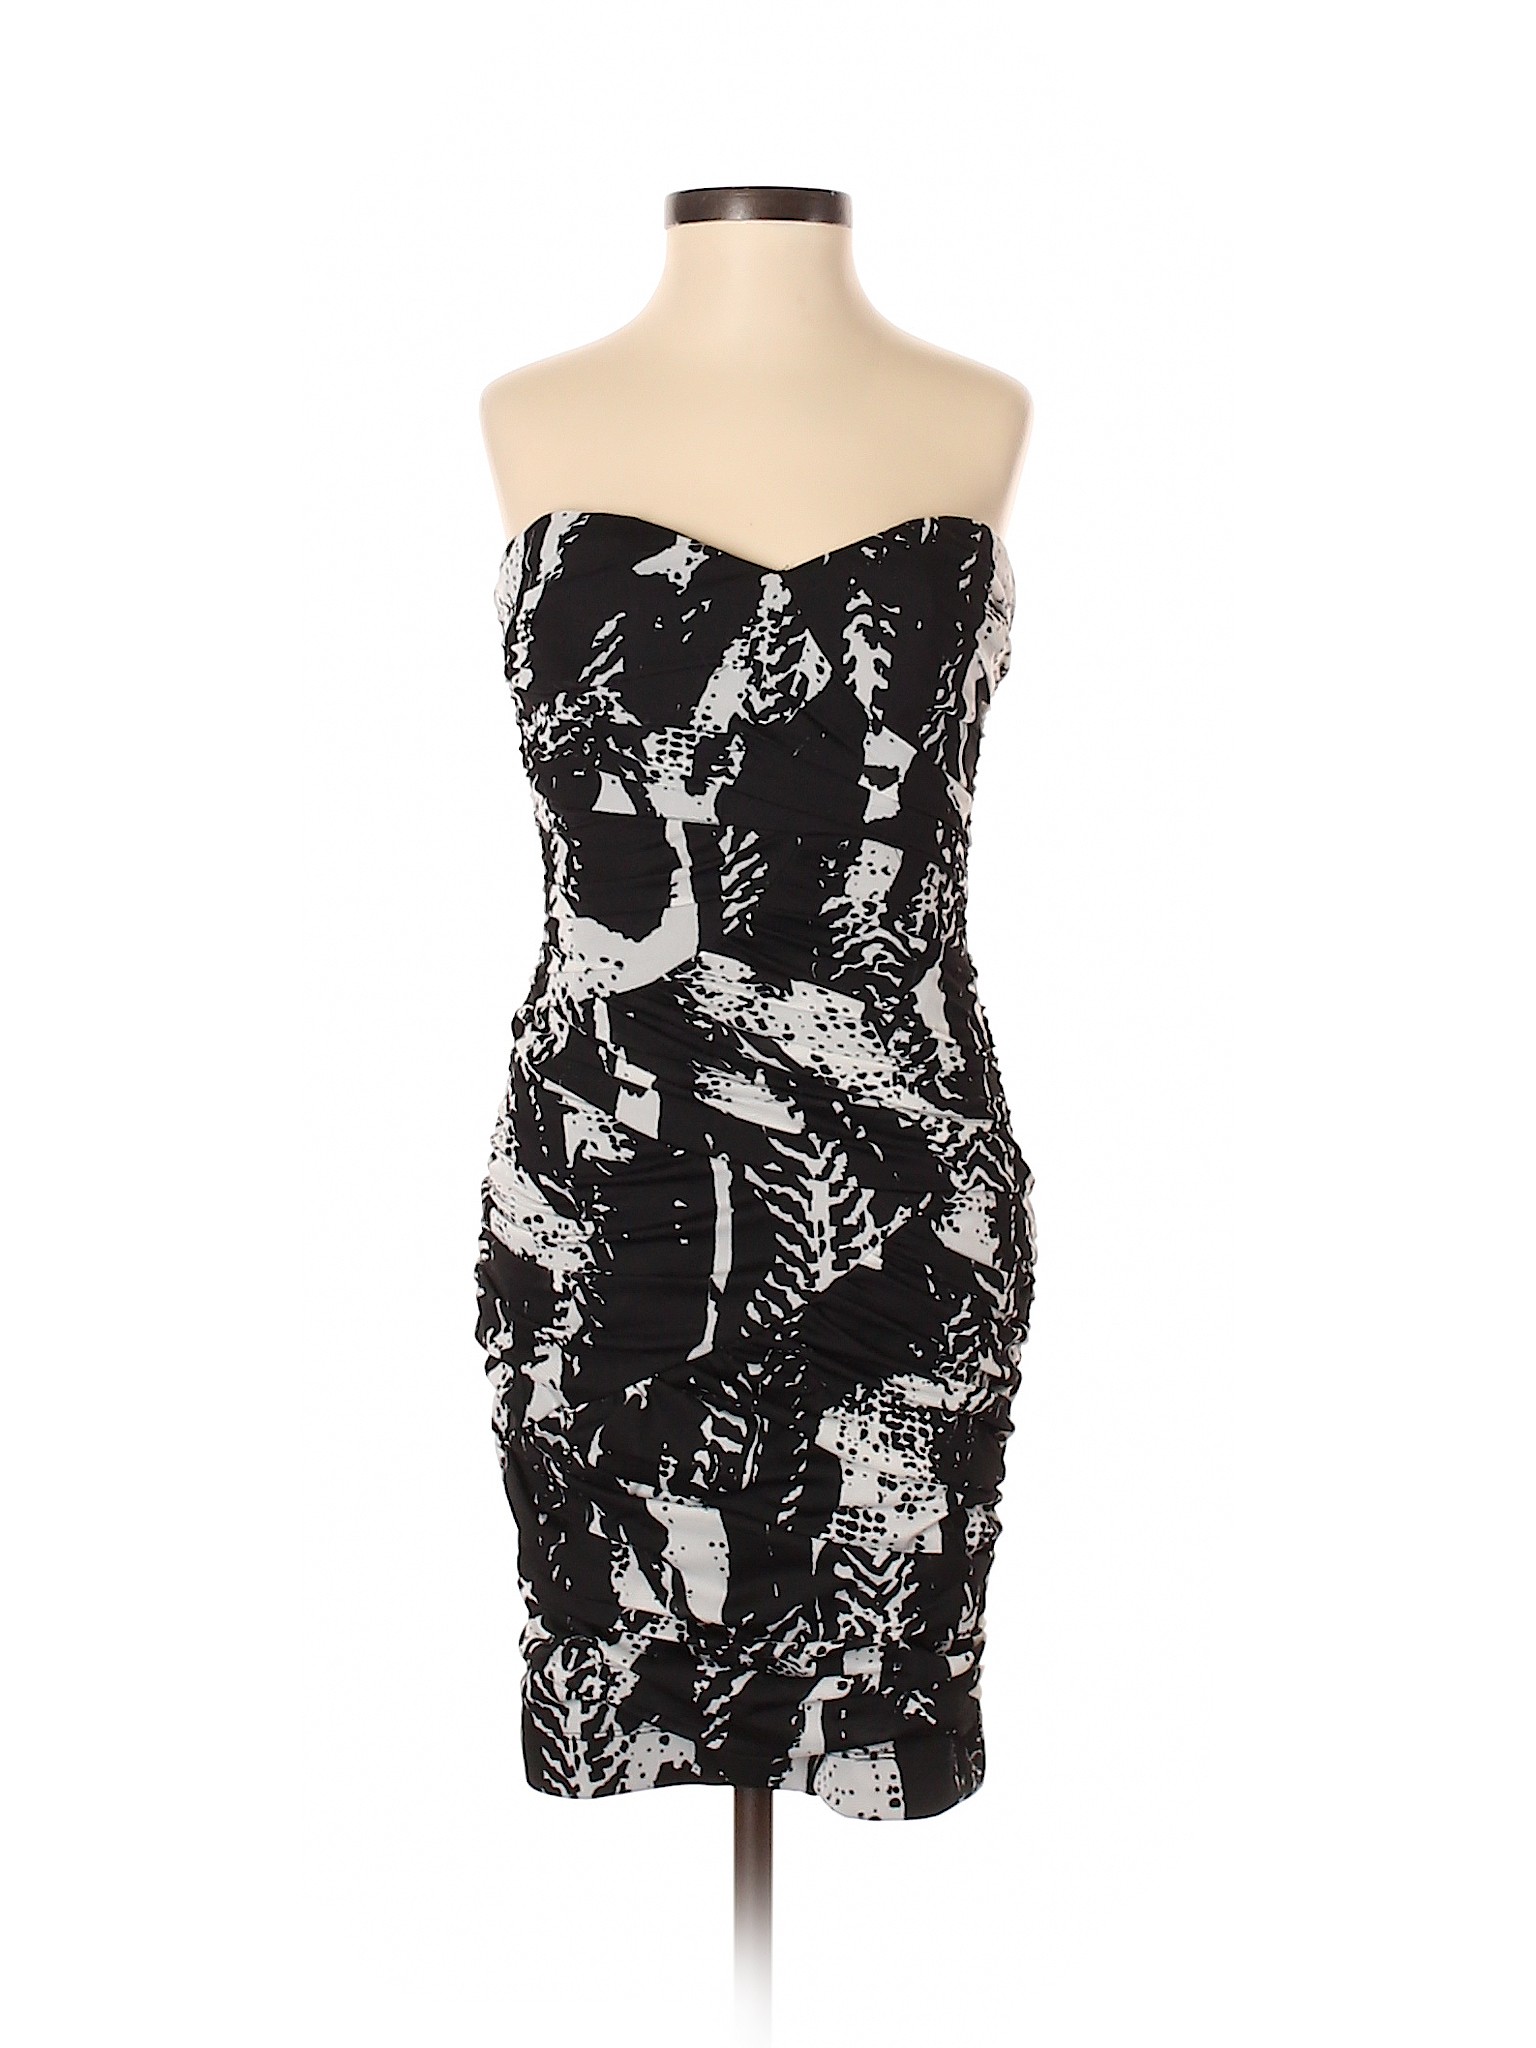 NWT Arden B. Women Black Cocktail Dress S | eBay